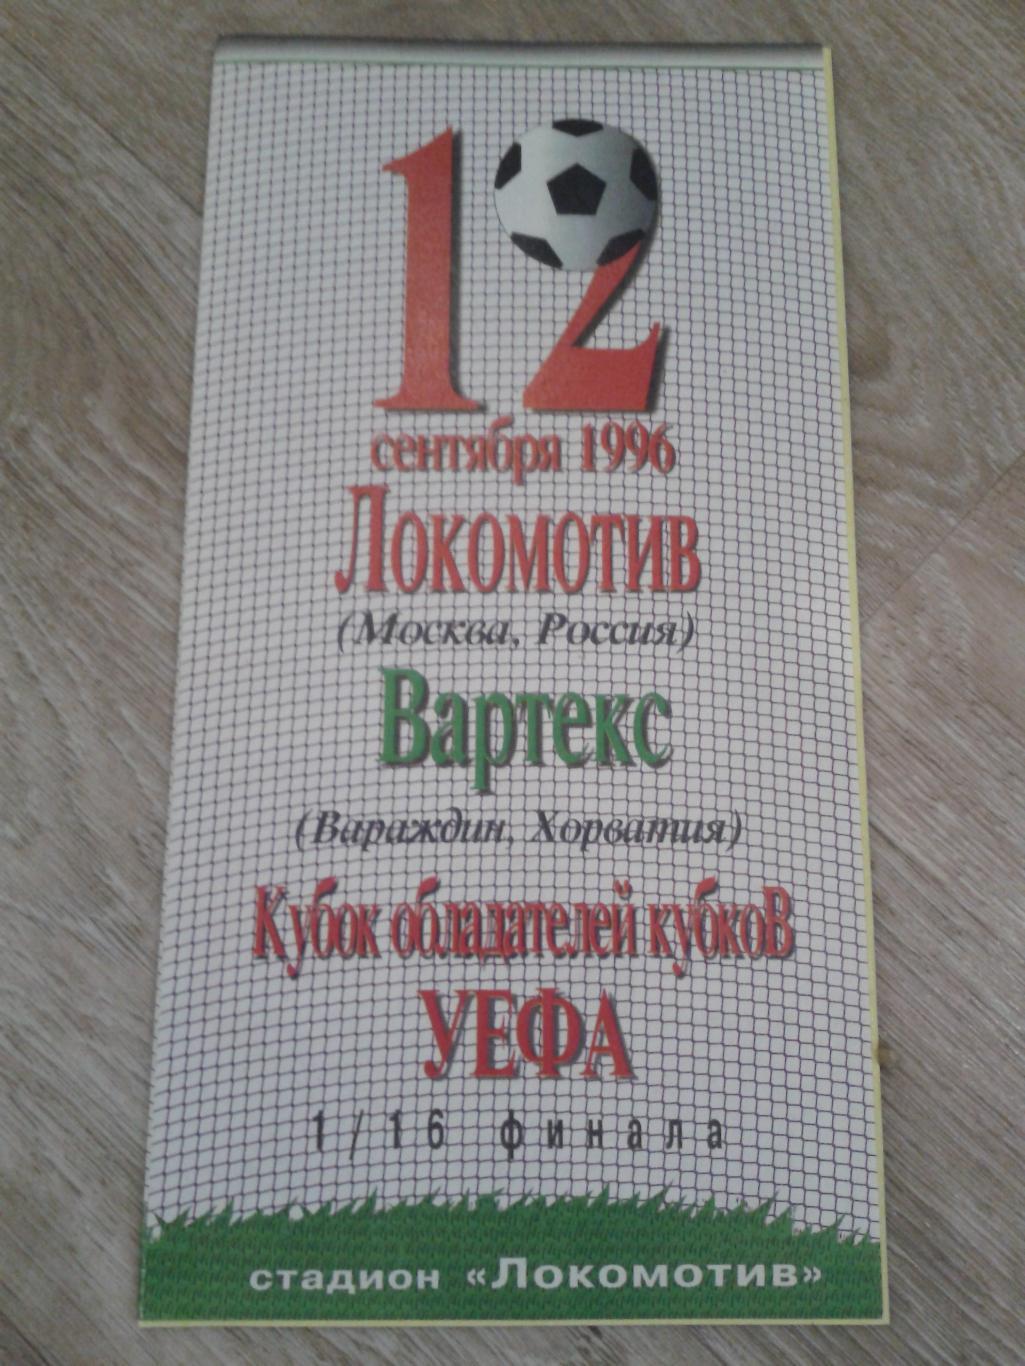 1996 Локомотив Москва-Вартекс